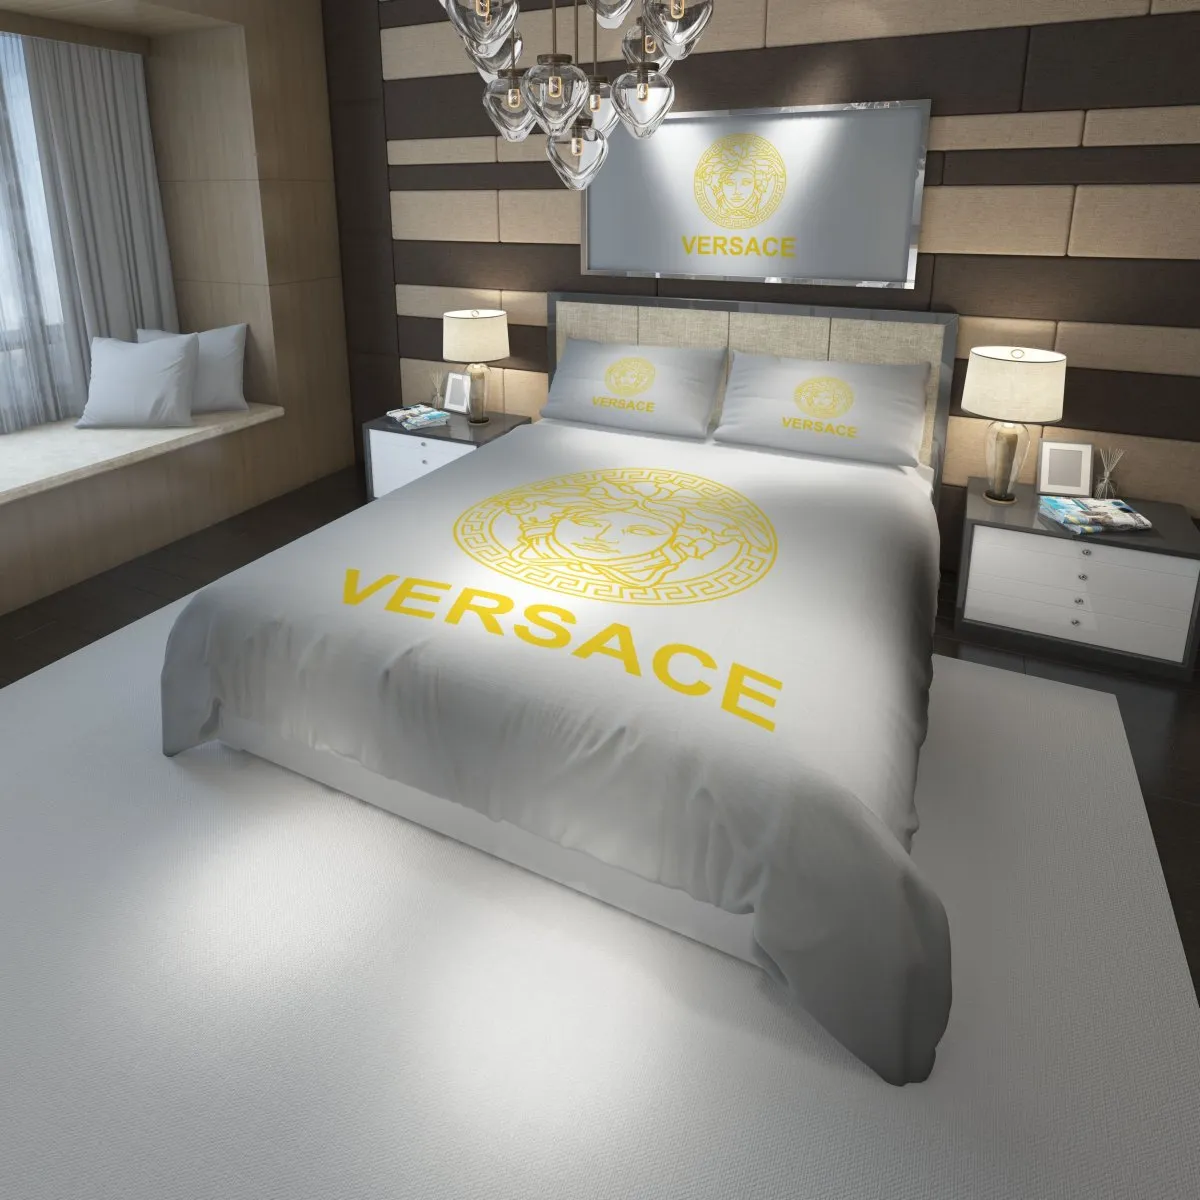 Versace White Golden Logo Brand Bedding Set Luxury Bedroom Home Decor Bedspread